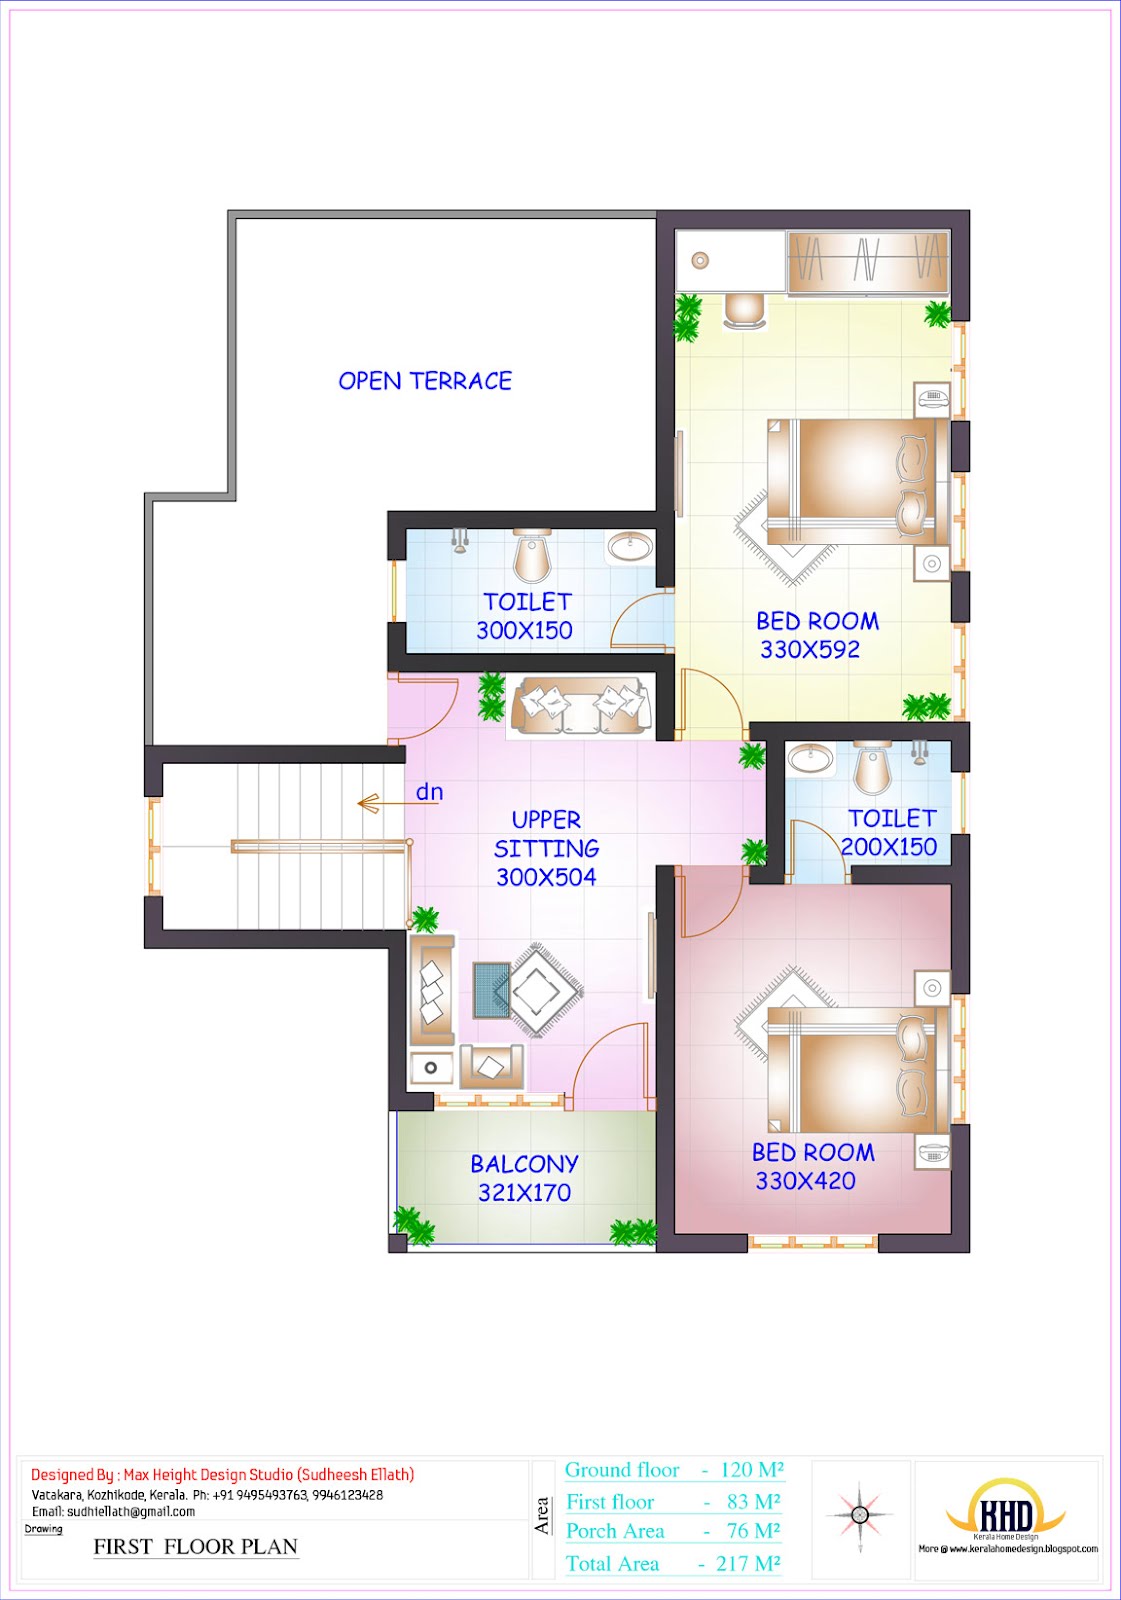 Floor plan and elevation of 2336 sq.feet, 4 bedroom house - Kerala home